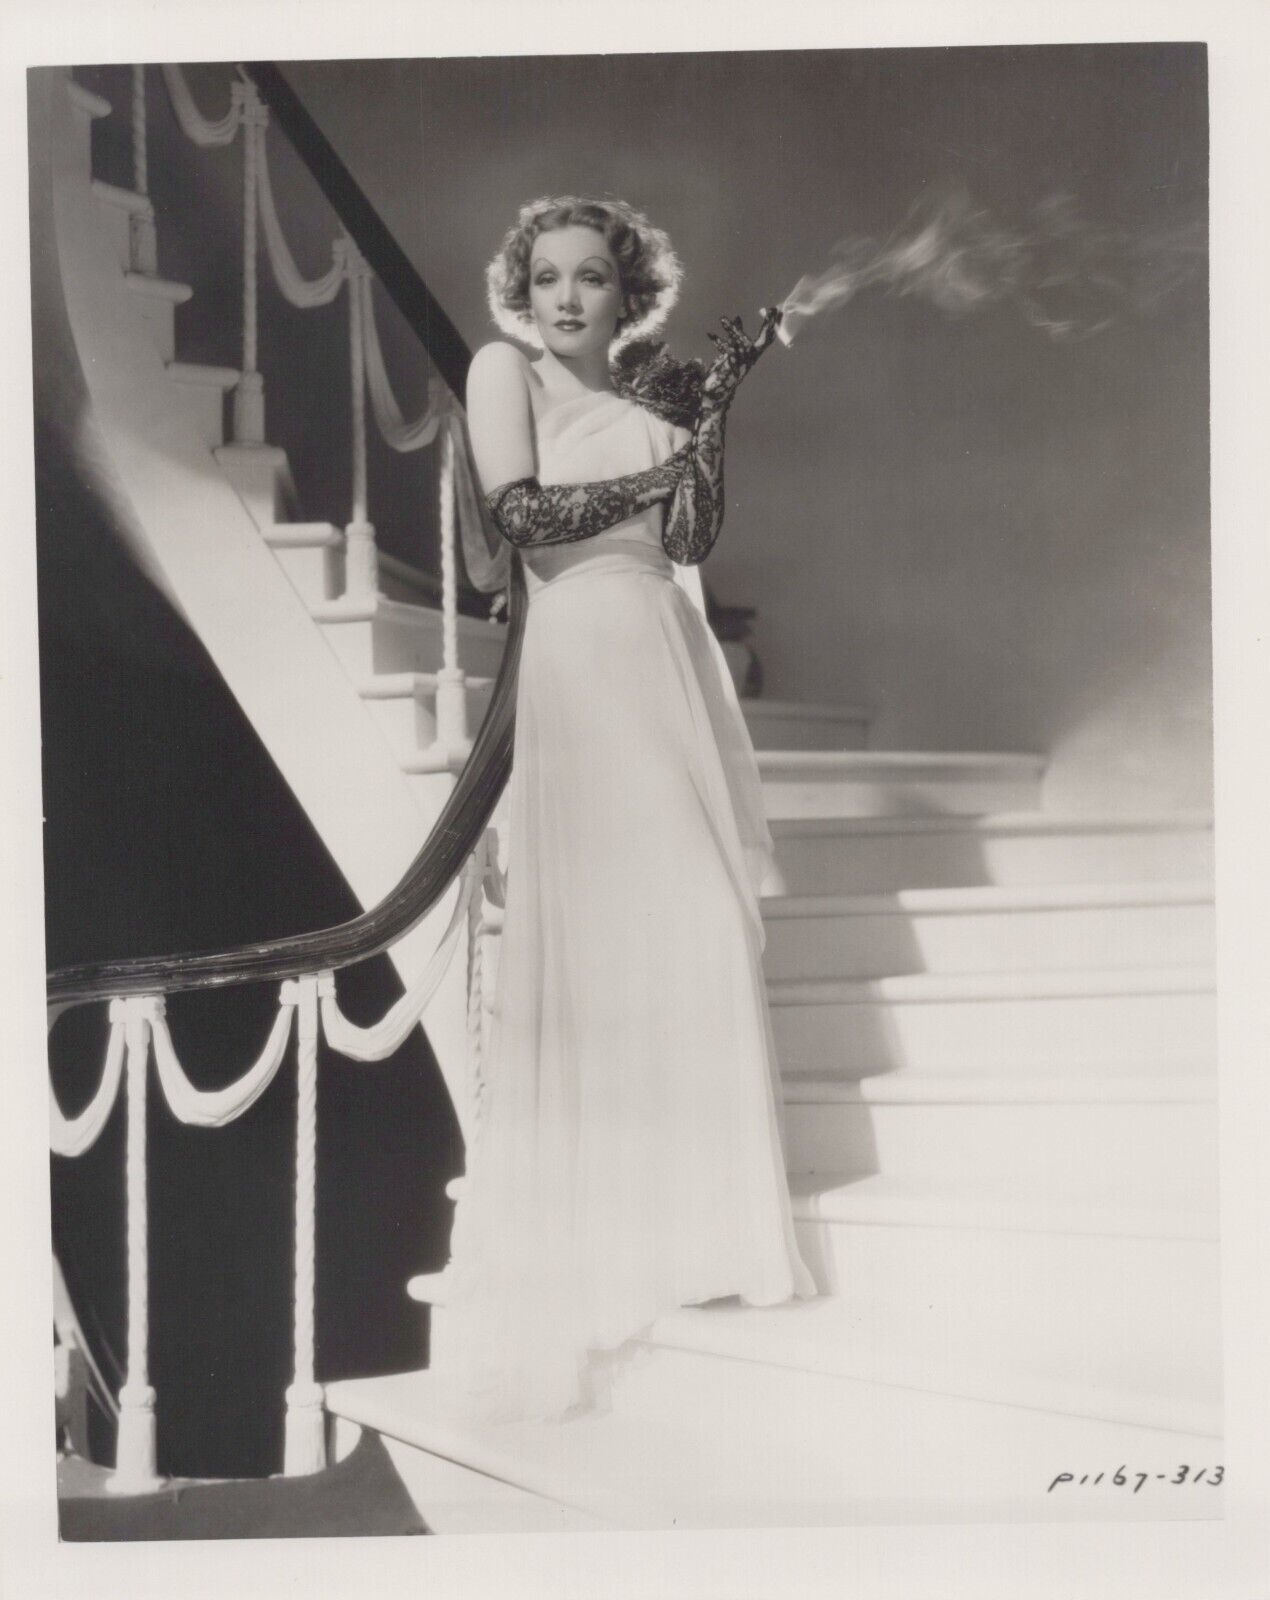 Marlene Dietrich (1970s) ❤ Hollywood Beauty - Stylish Glamorous Photo K 432